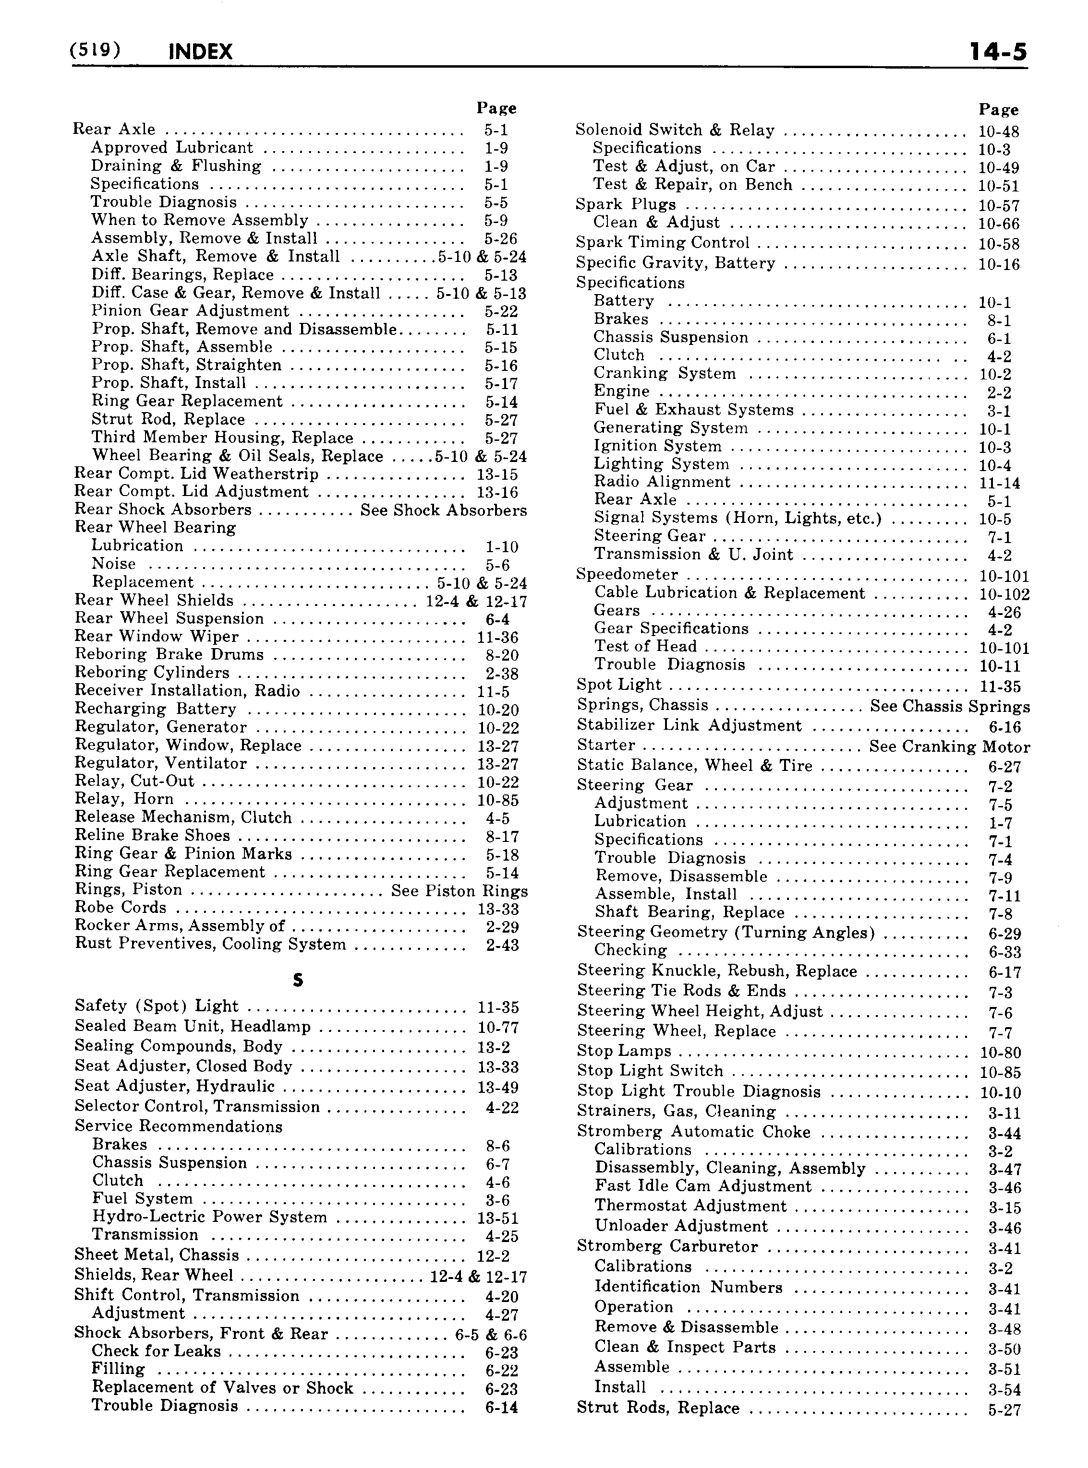 n_15 1948 Buick Shop Manual - Index-005-005.jpg